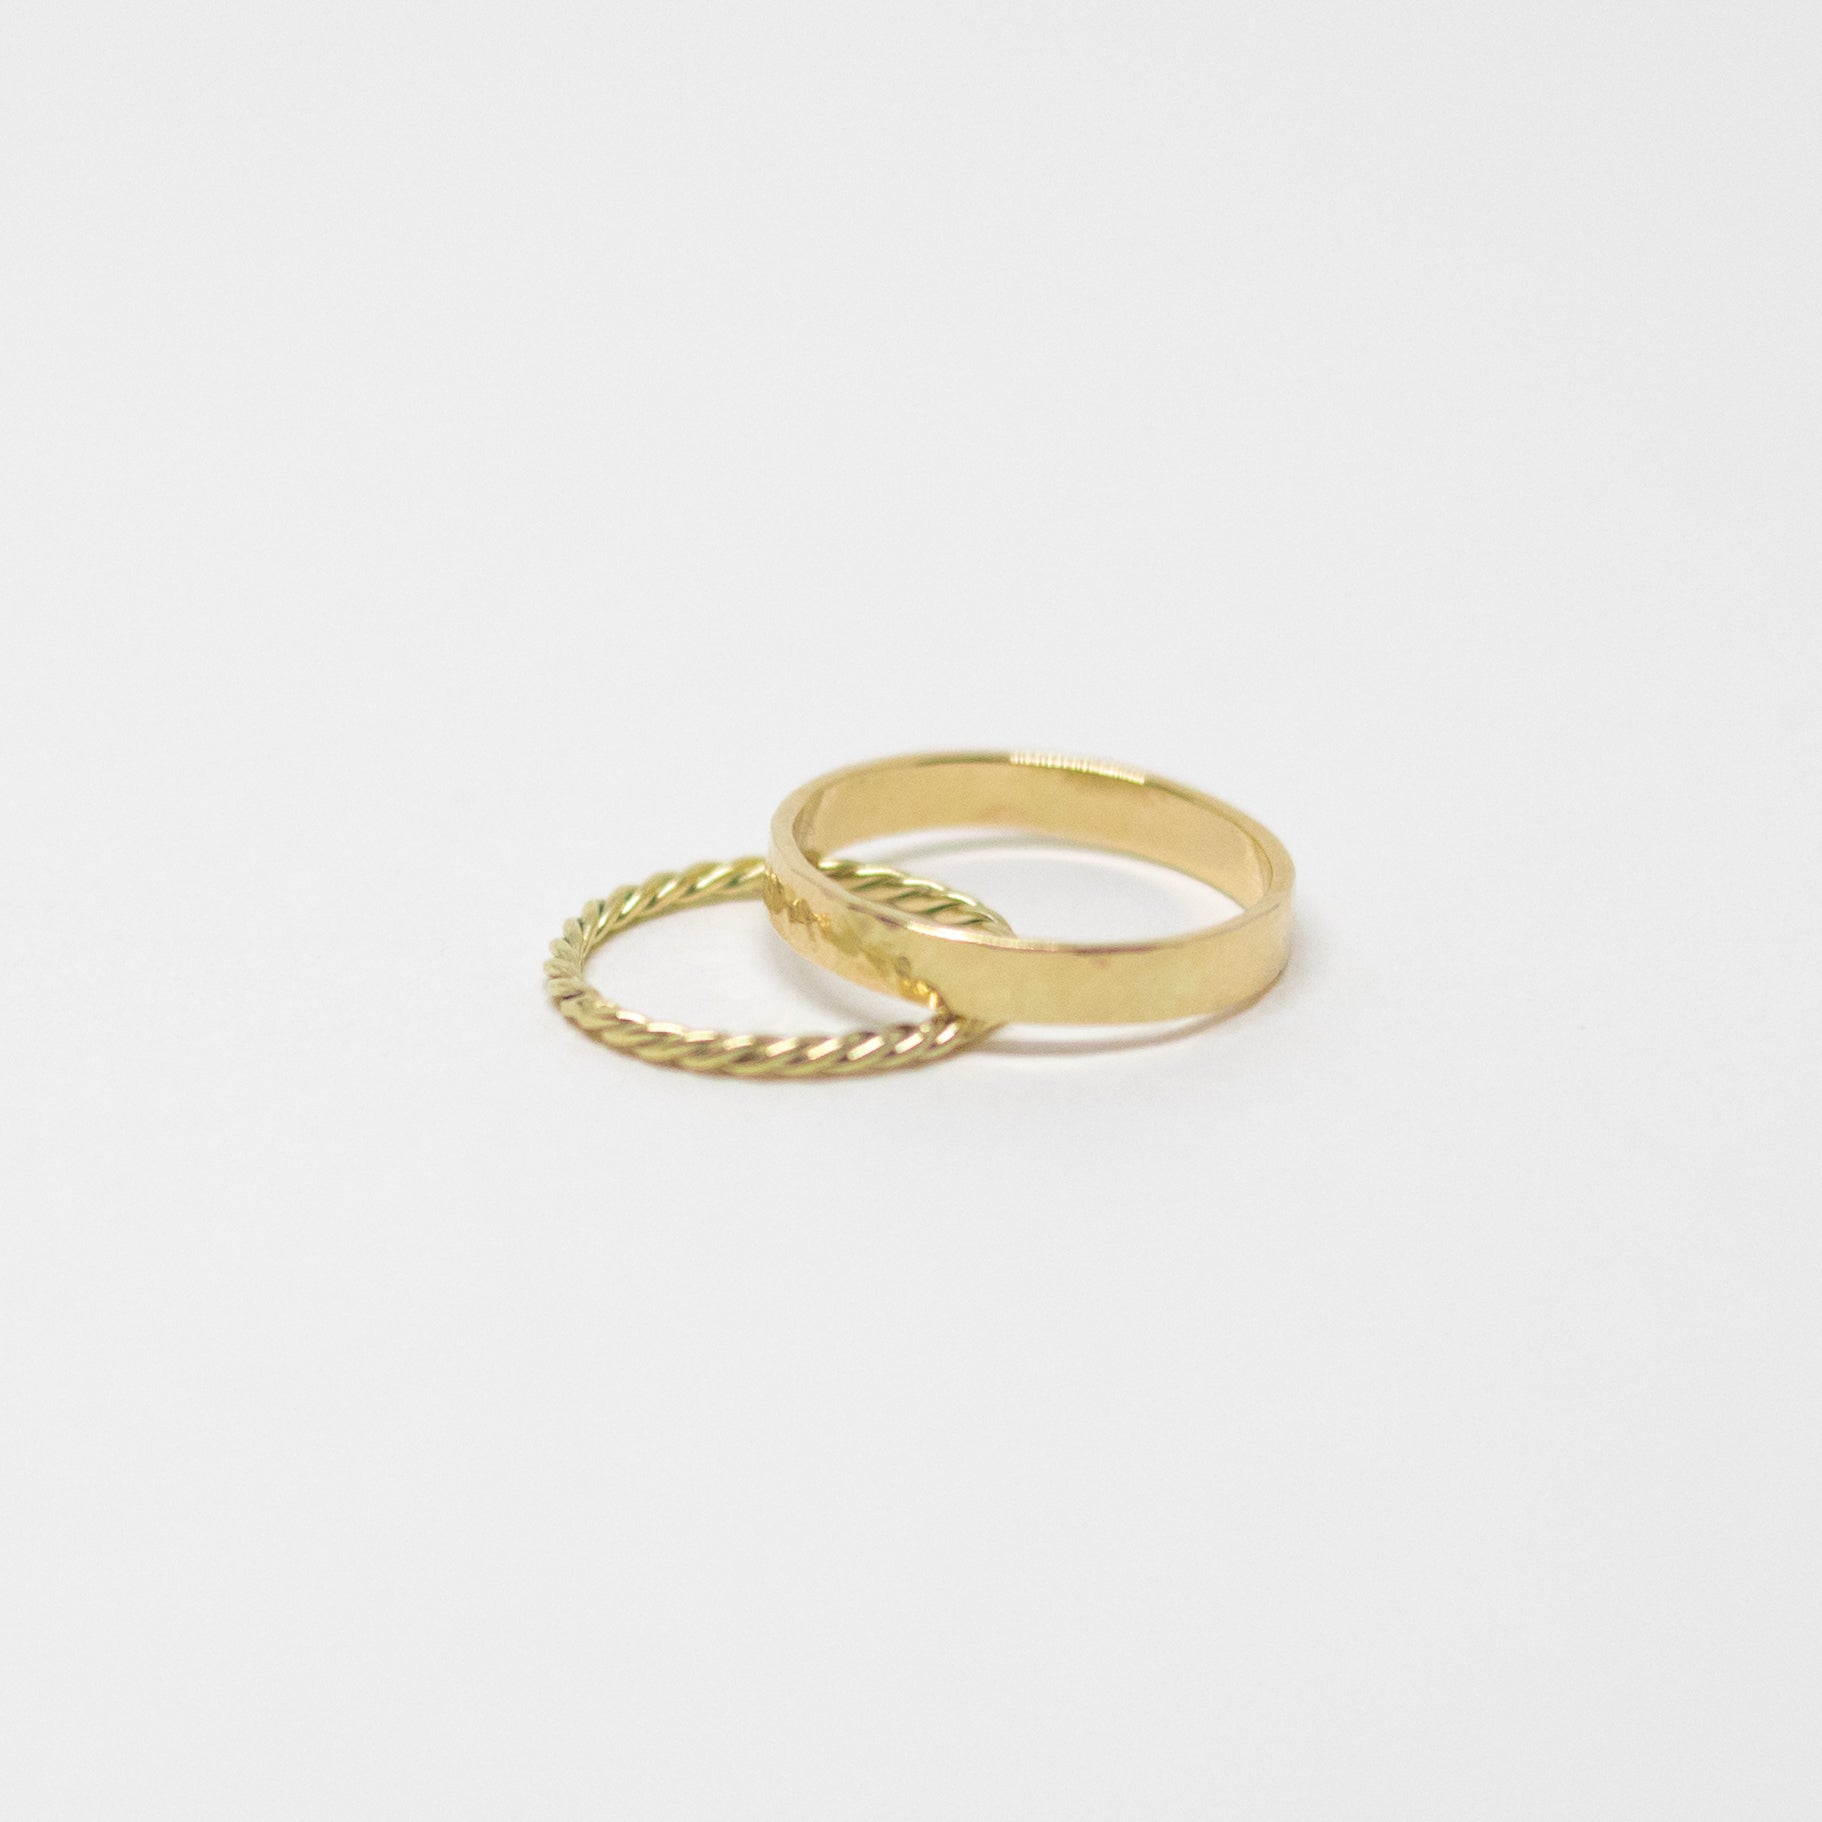 Gold band ring